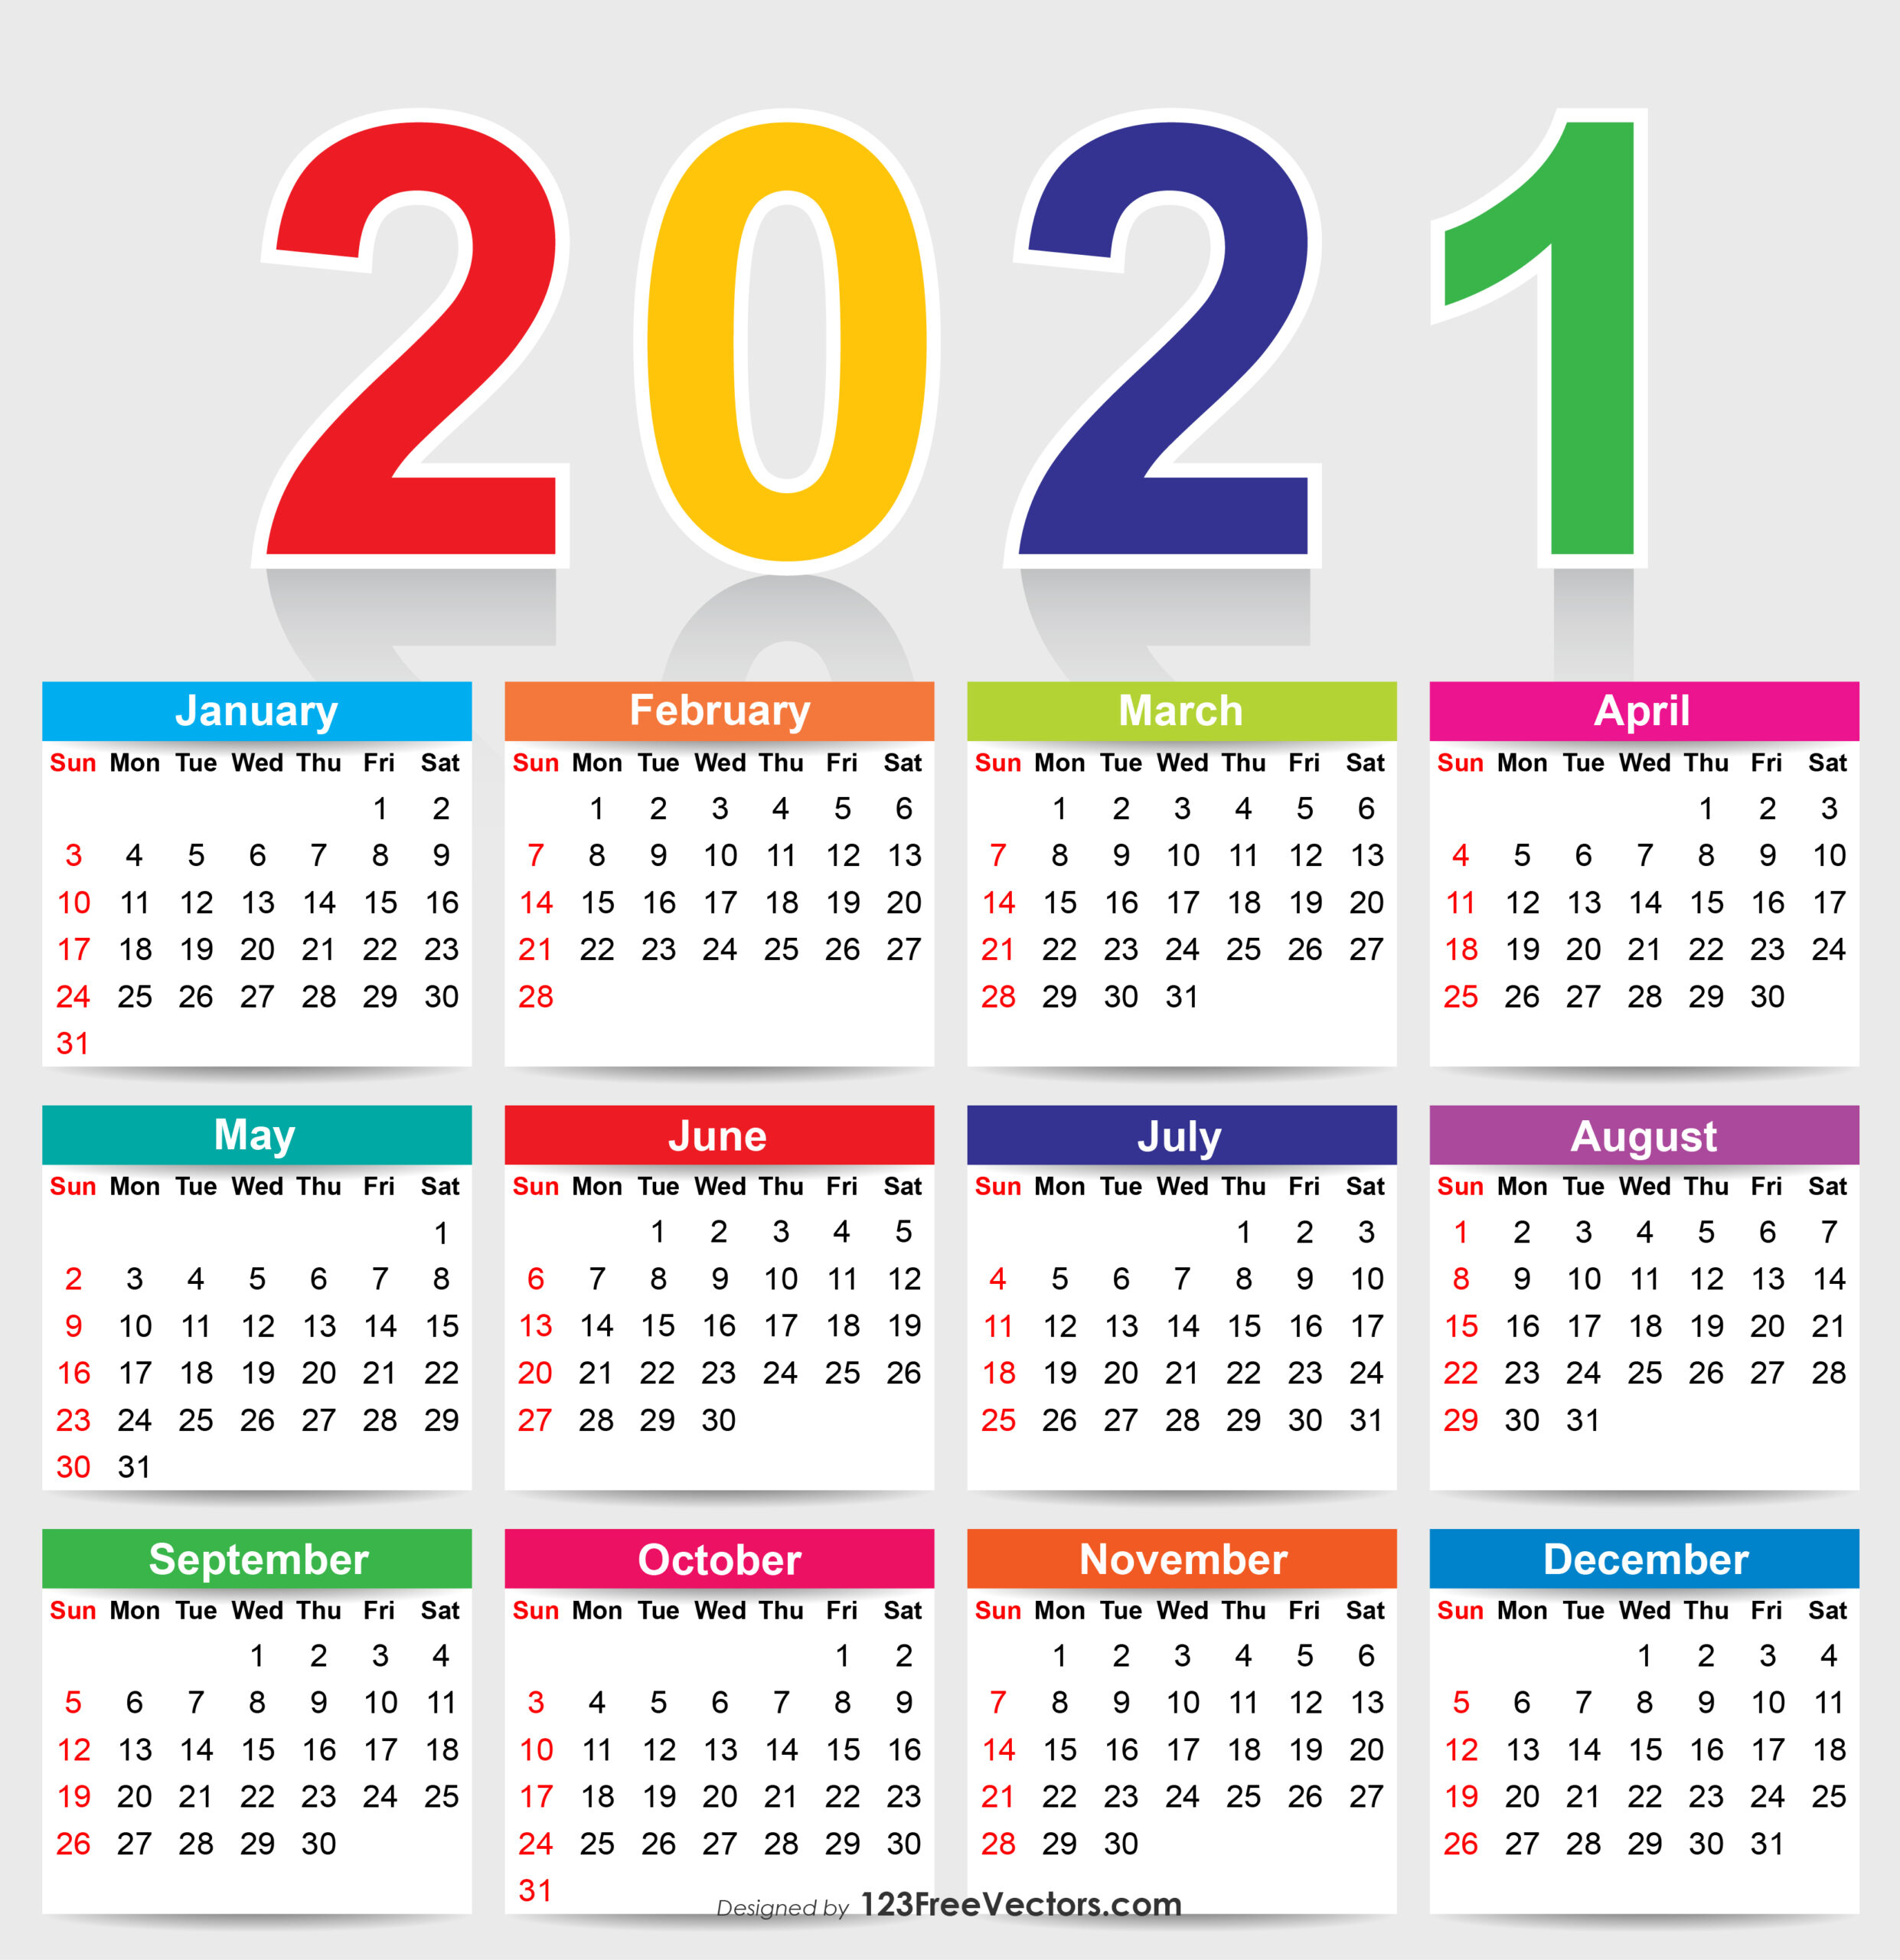 2022 Calendar Psd File Download | September 2022 Calendar